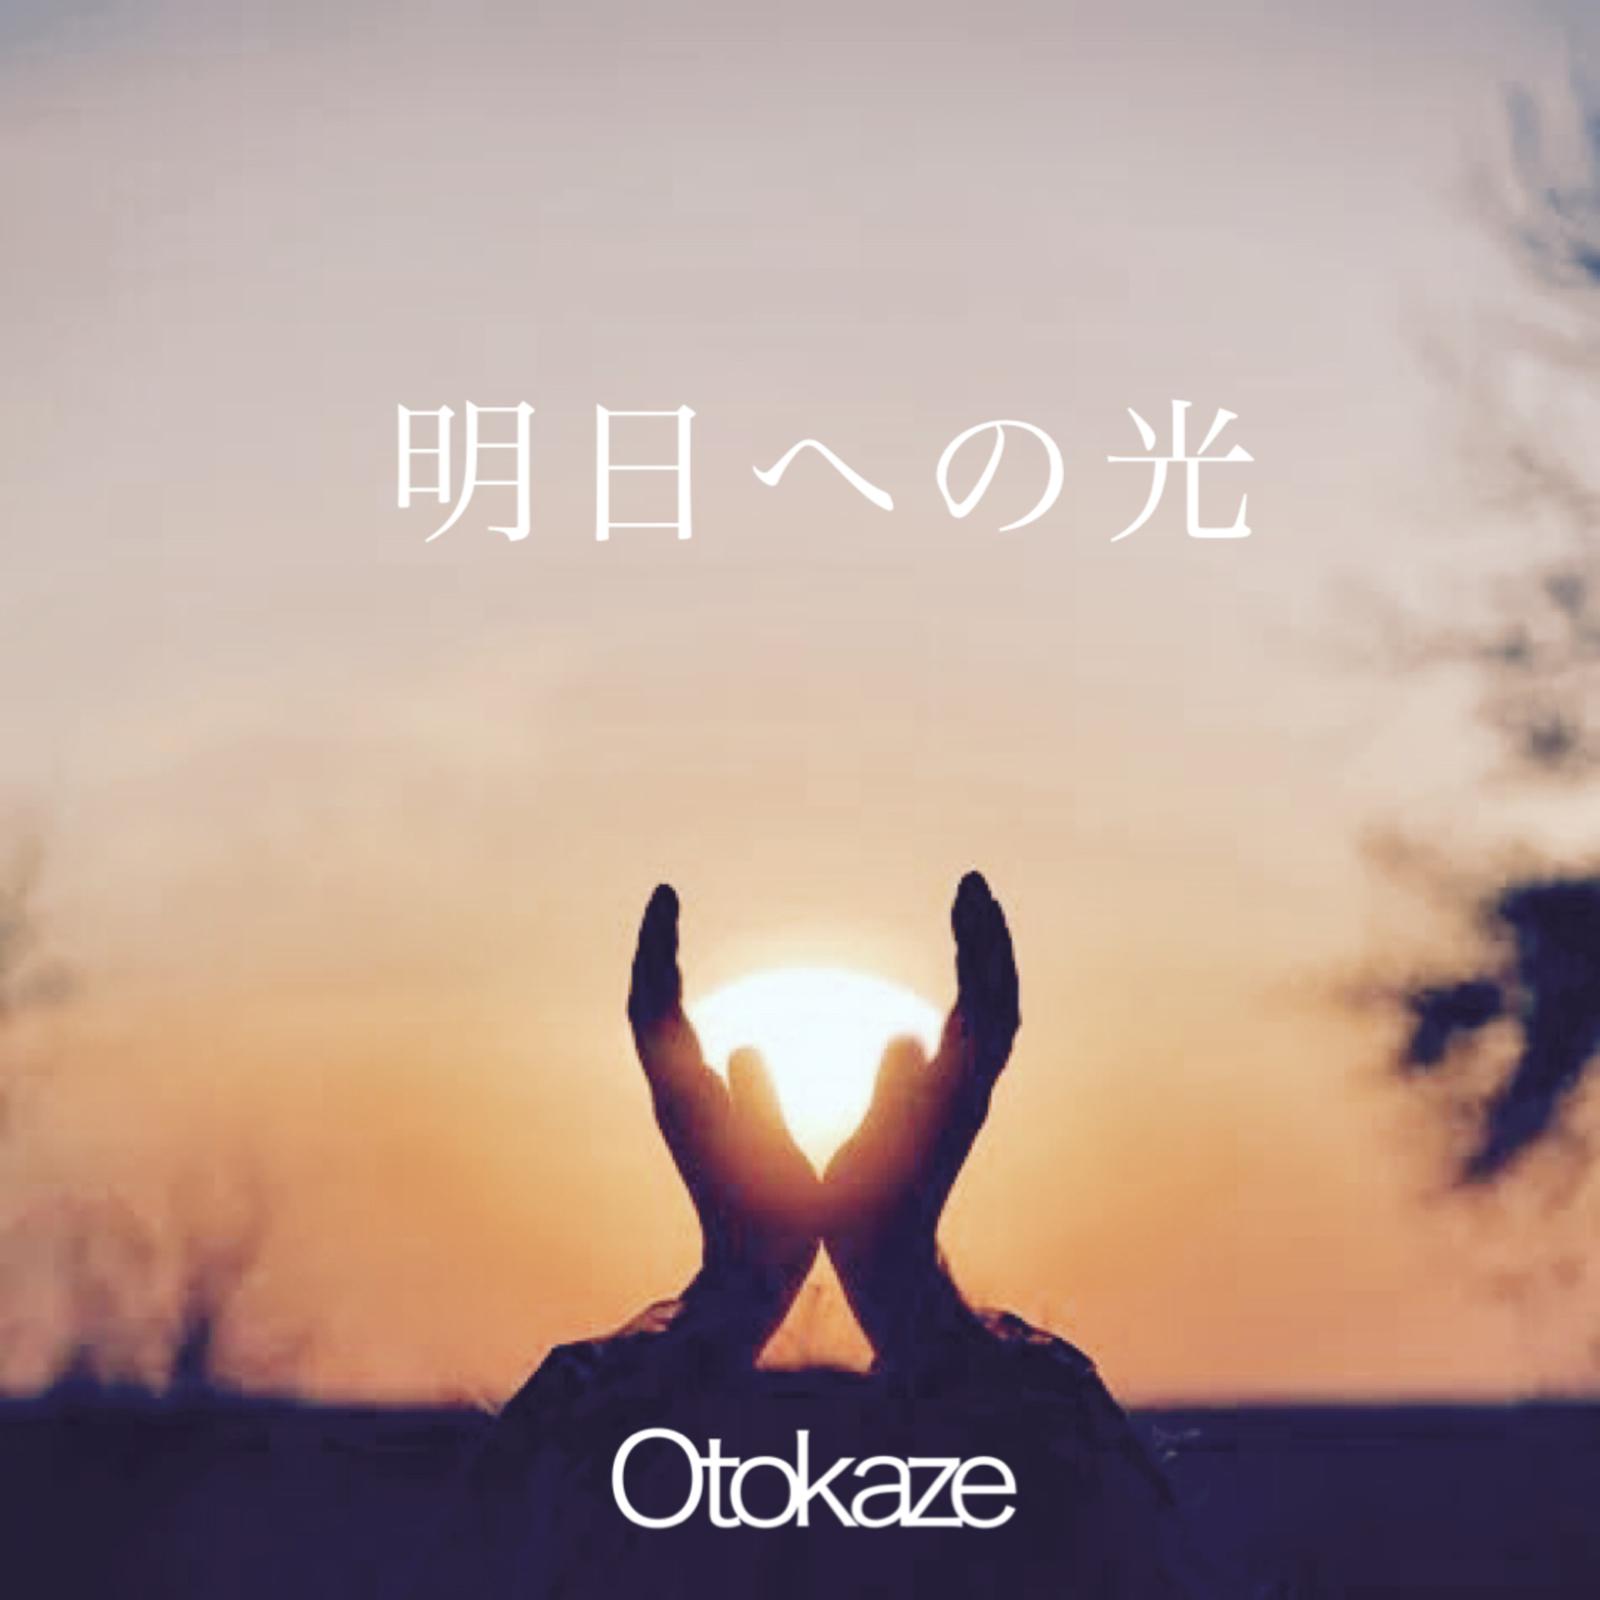 Otokaze - 明日への光